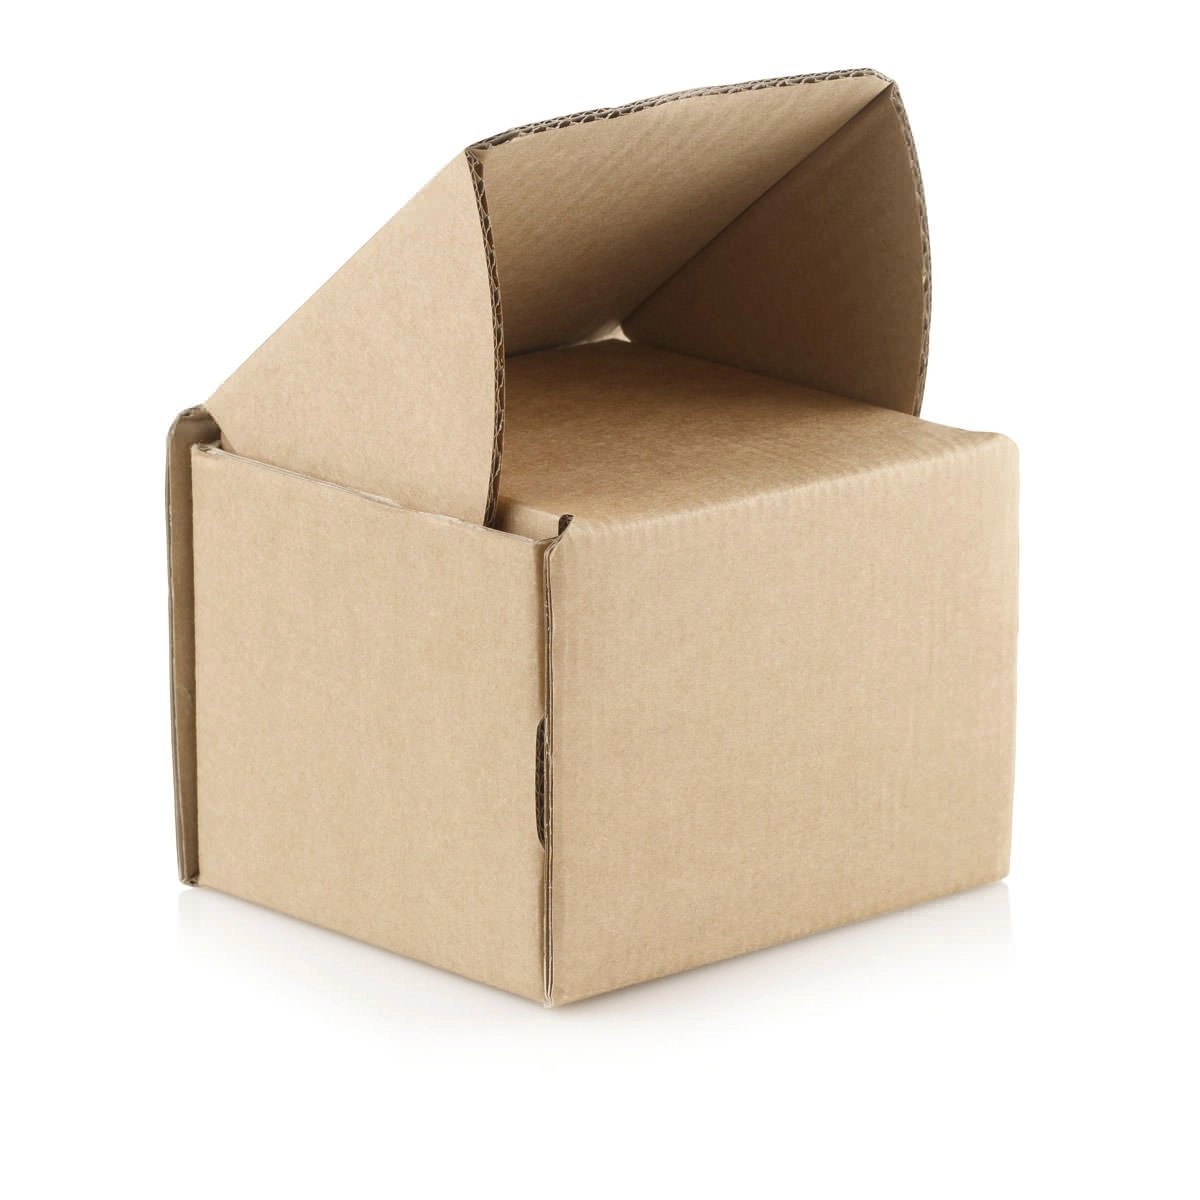 0003330_mug-gift-box-postage-box-25-per-pack